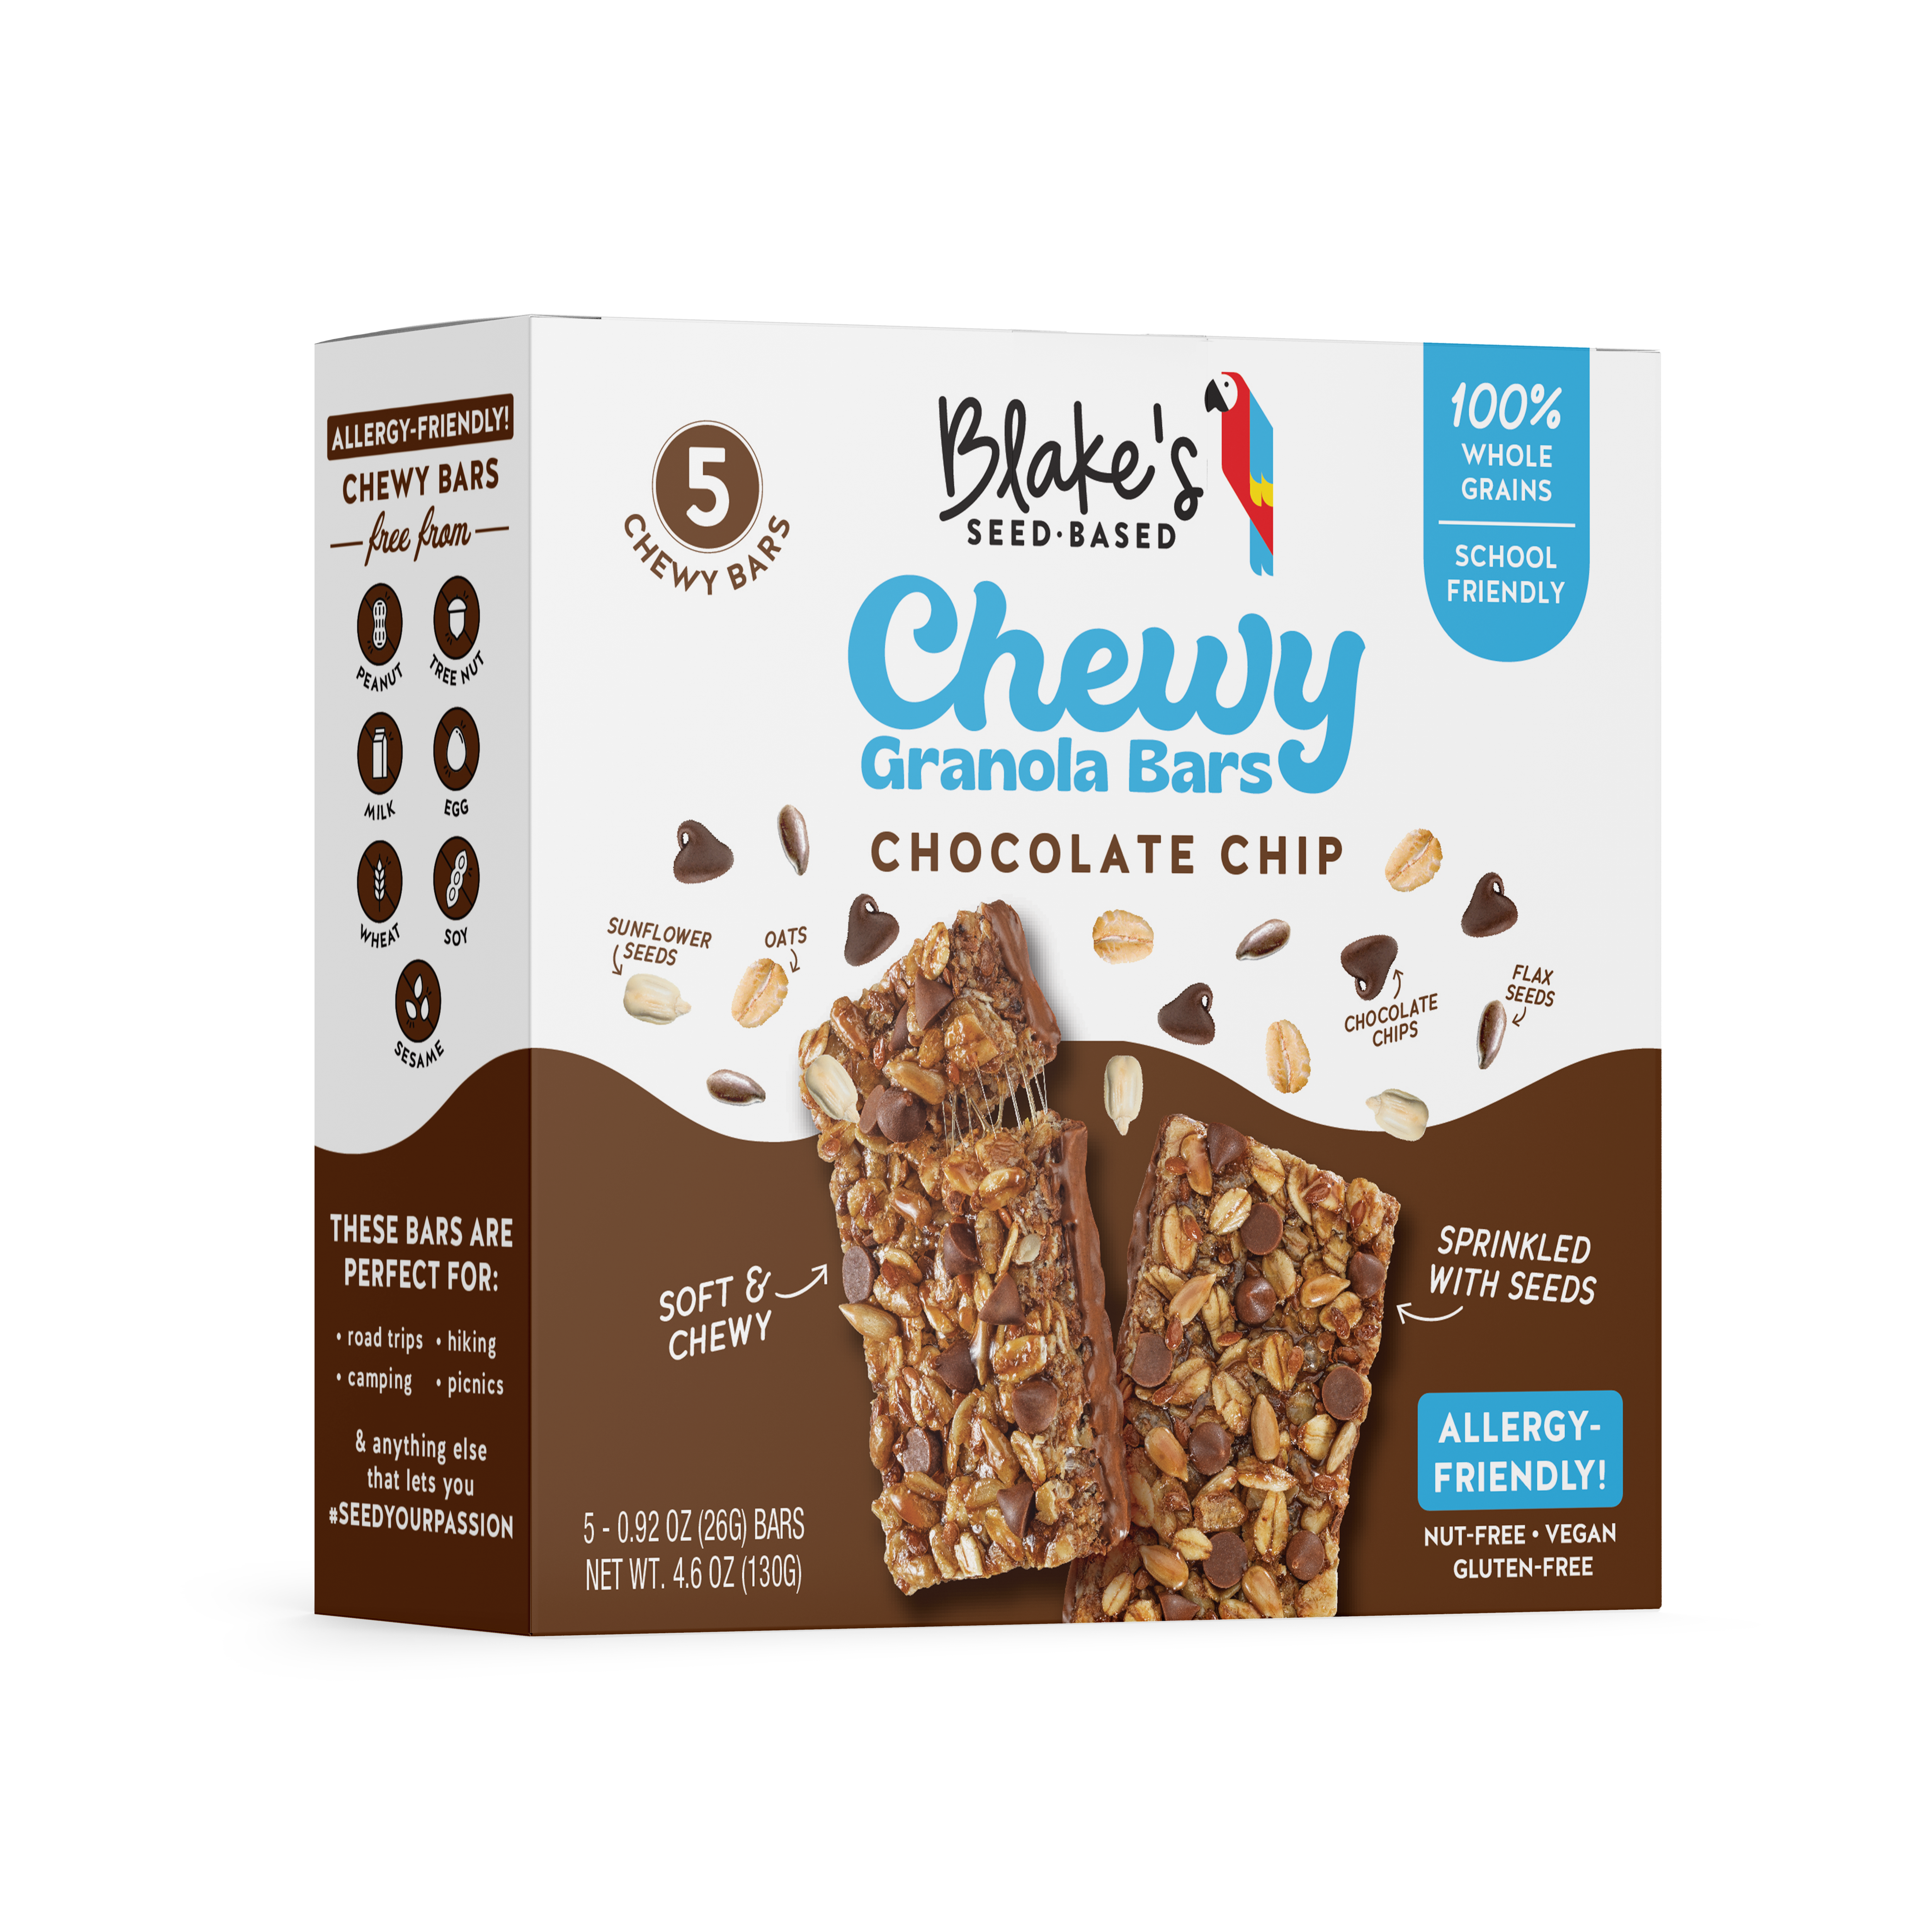 Blake's Seed Based Chocolate Chip Chewy Granloa Bar 12 innerpacks per case 4.6 oz